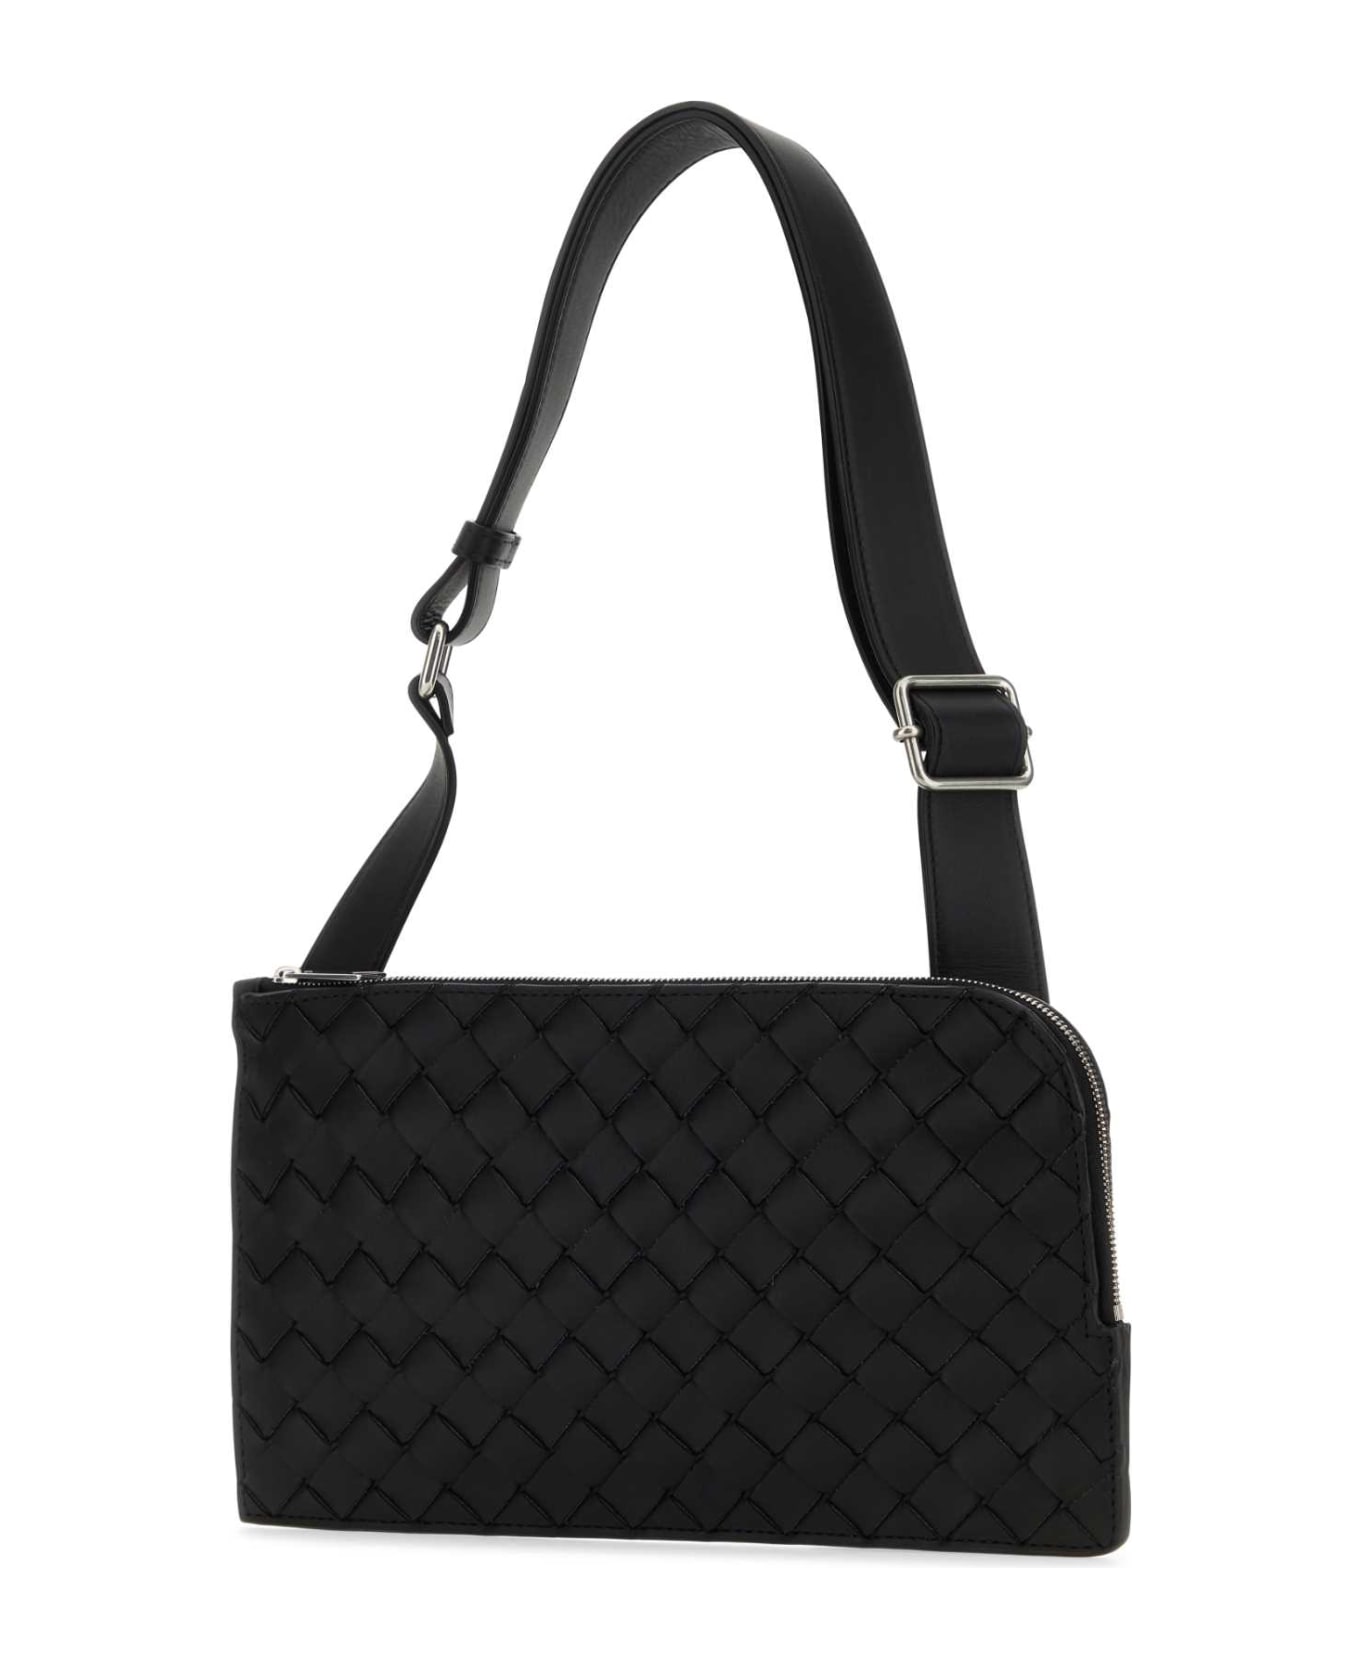 Bottega Veneta Black Leather Belt Bag - BLACKSILVER